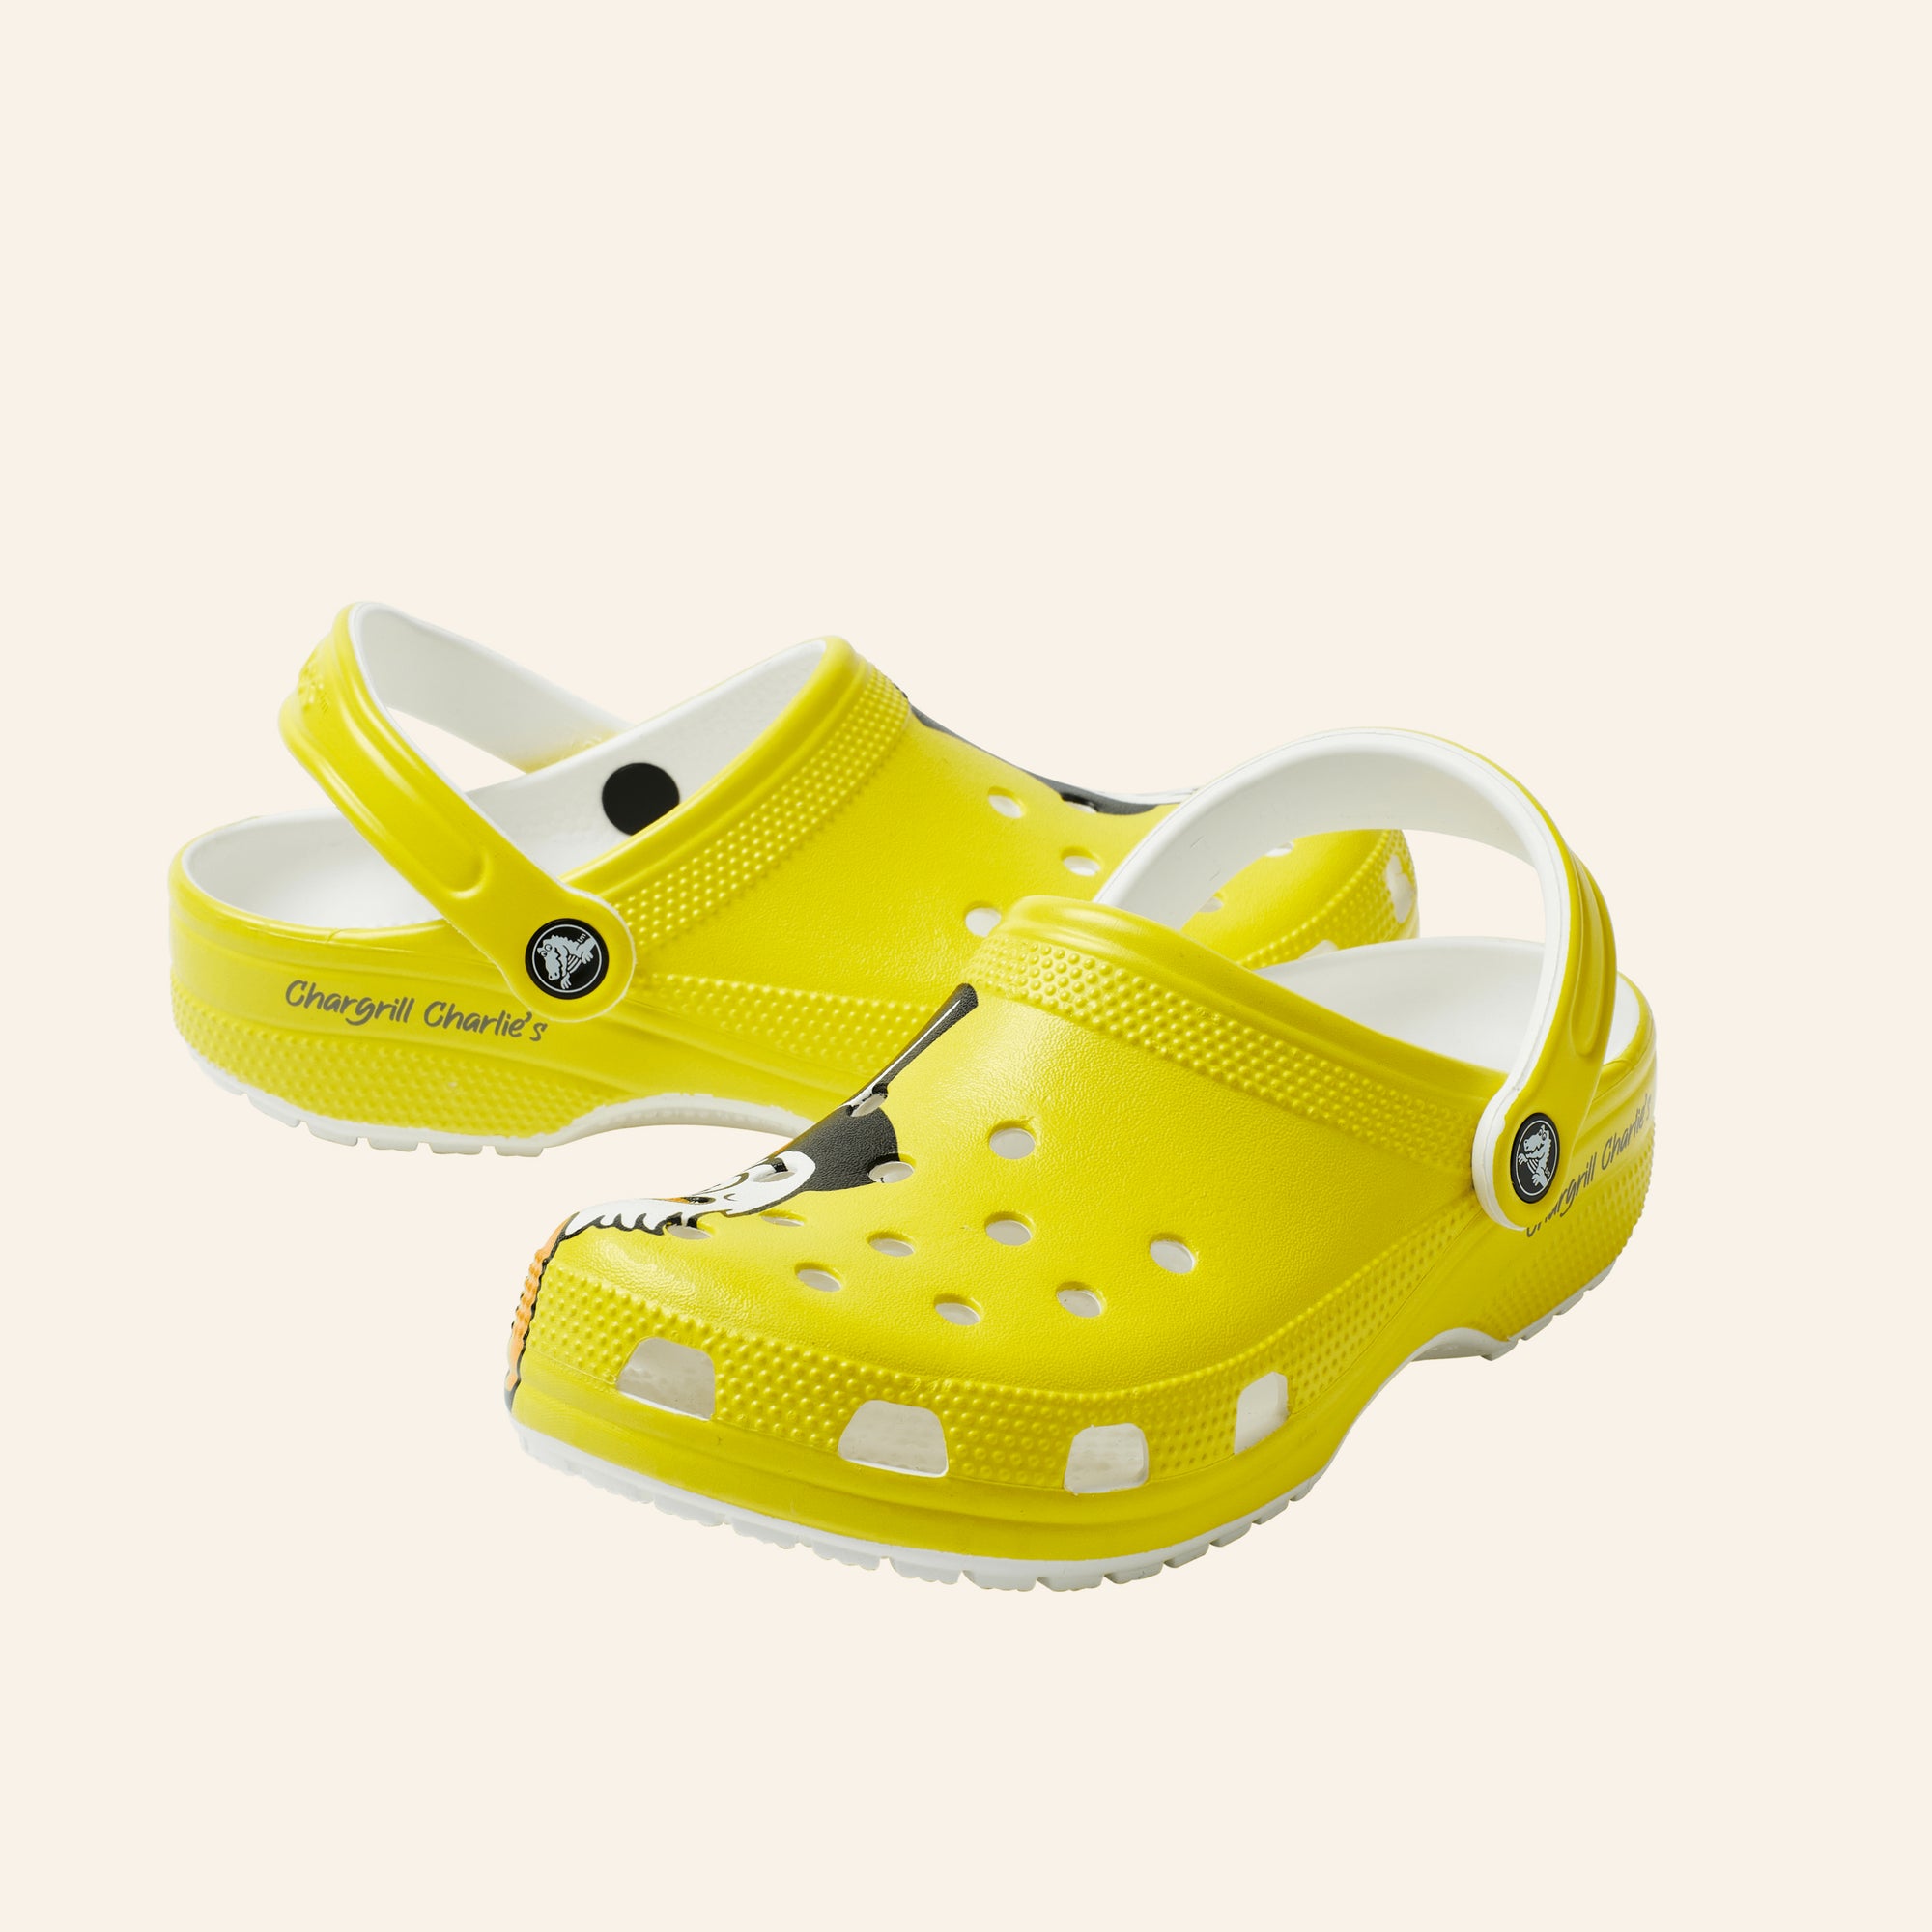 Chargrill Charlie's X Crocs Happy-Feet Classic Clog